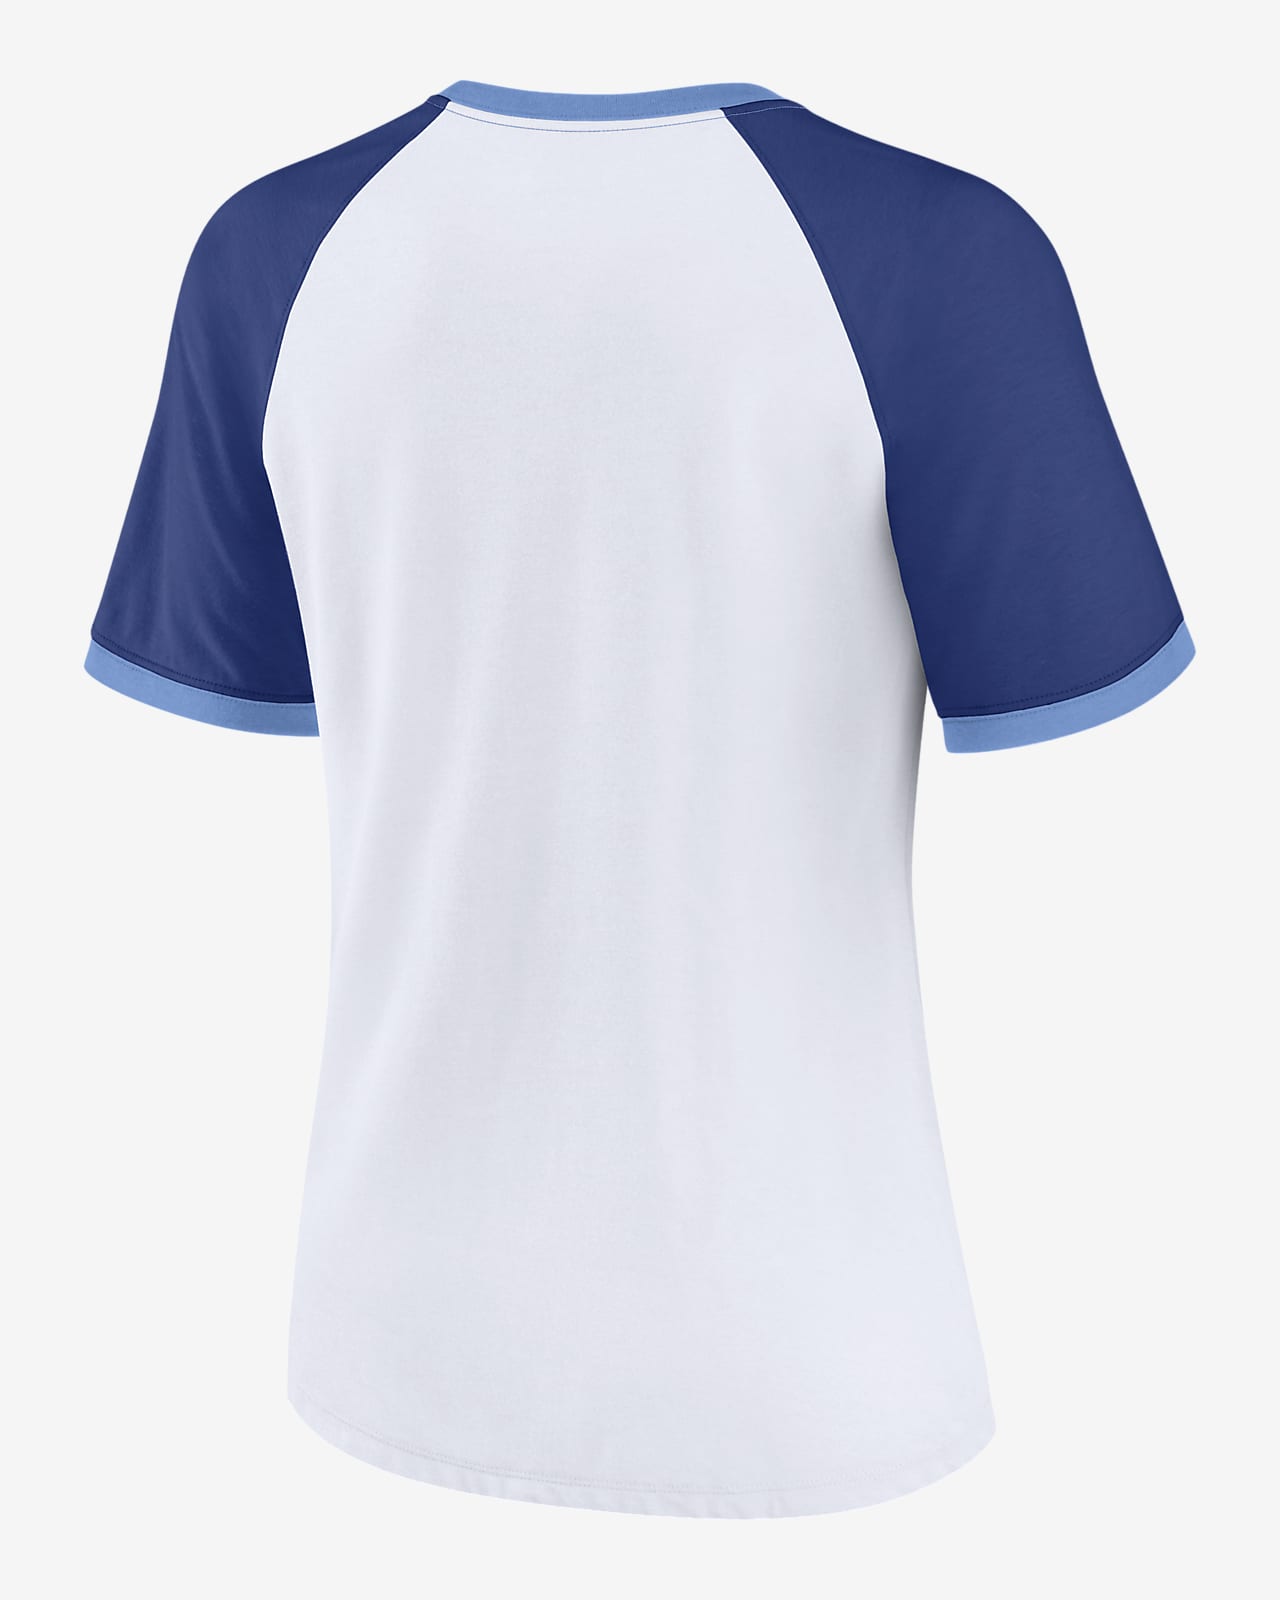 Nike Rewind Color Remix (MLB Brooklyn Dodgers) Women's T-Shirt.